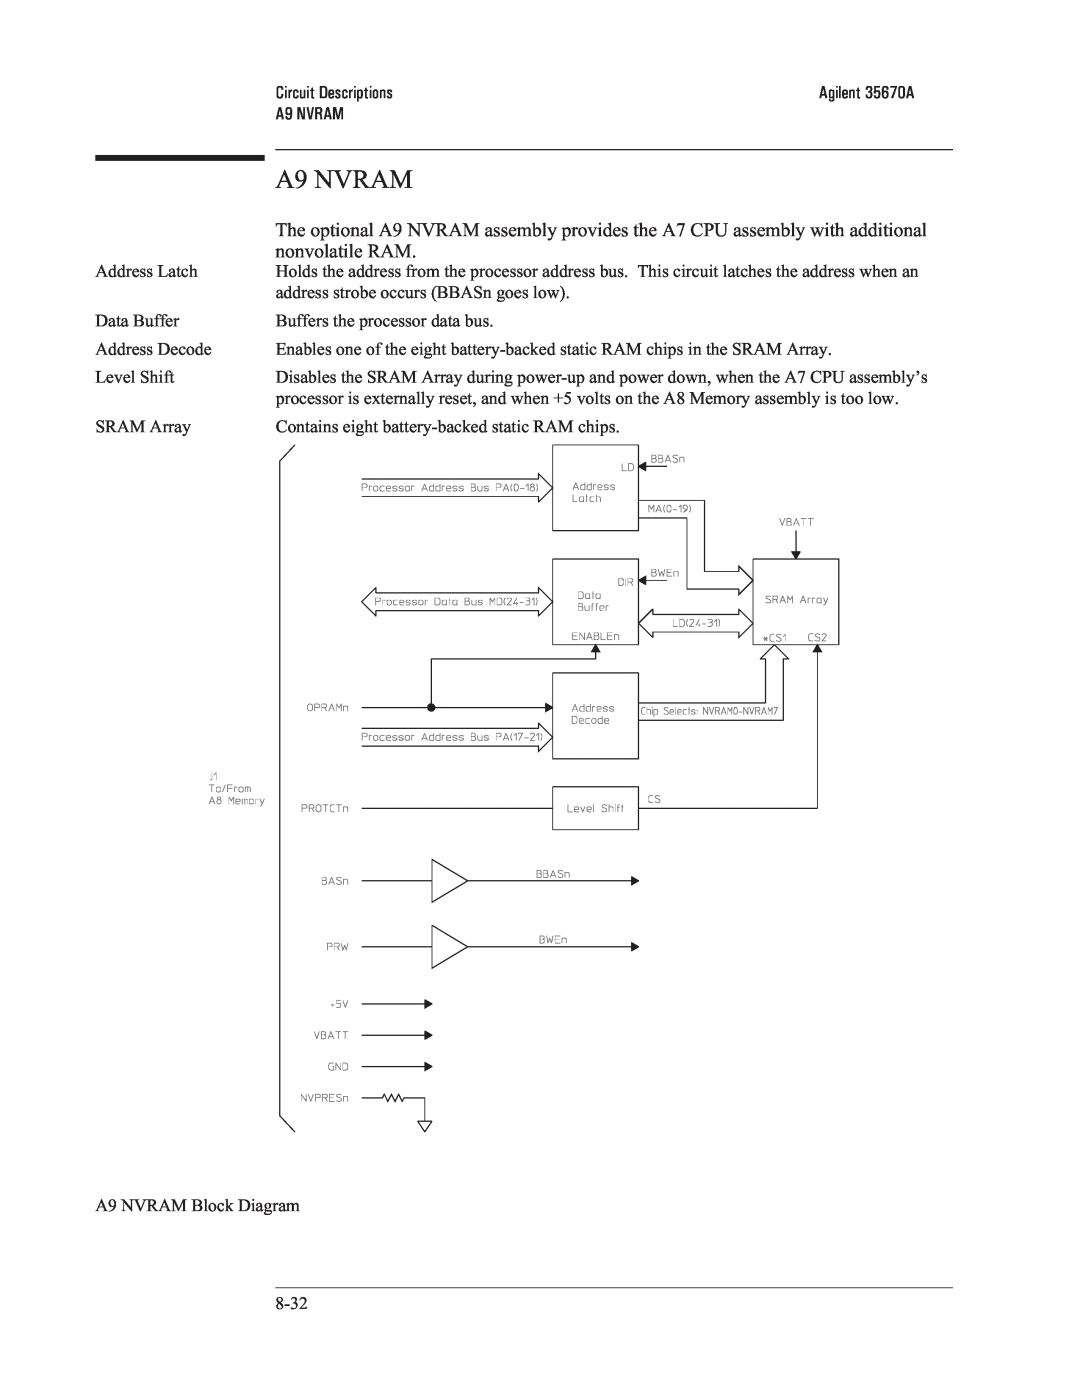 Agilent Technologies 35670-90066 manual nonvolatile RAM, A9 NVRAM Block Diagram 